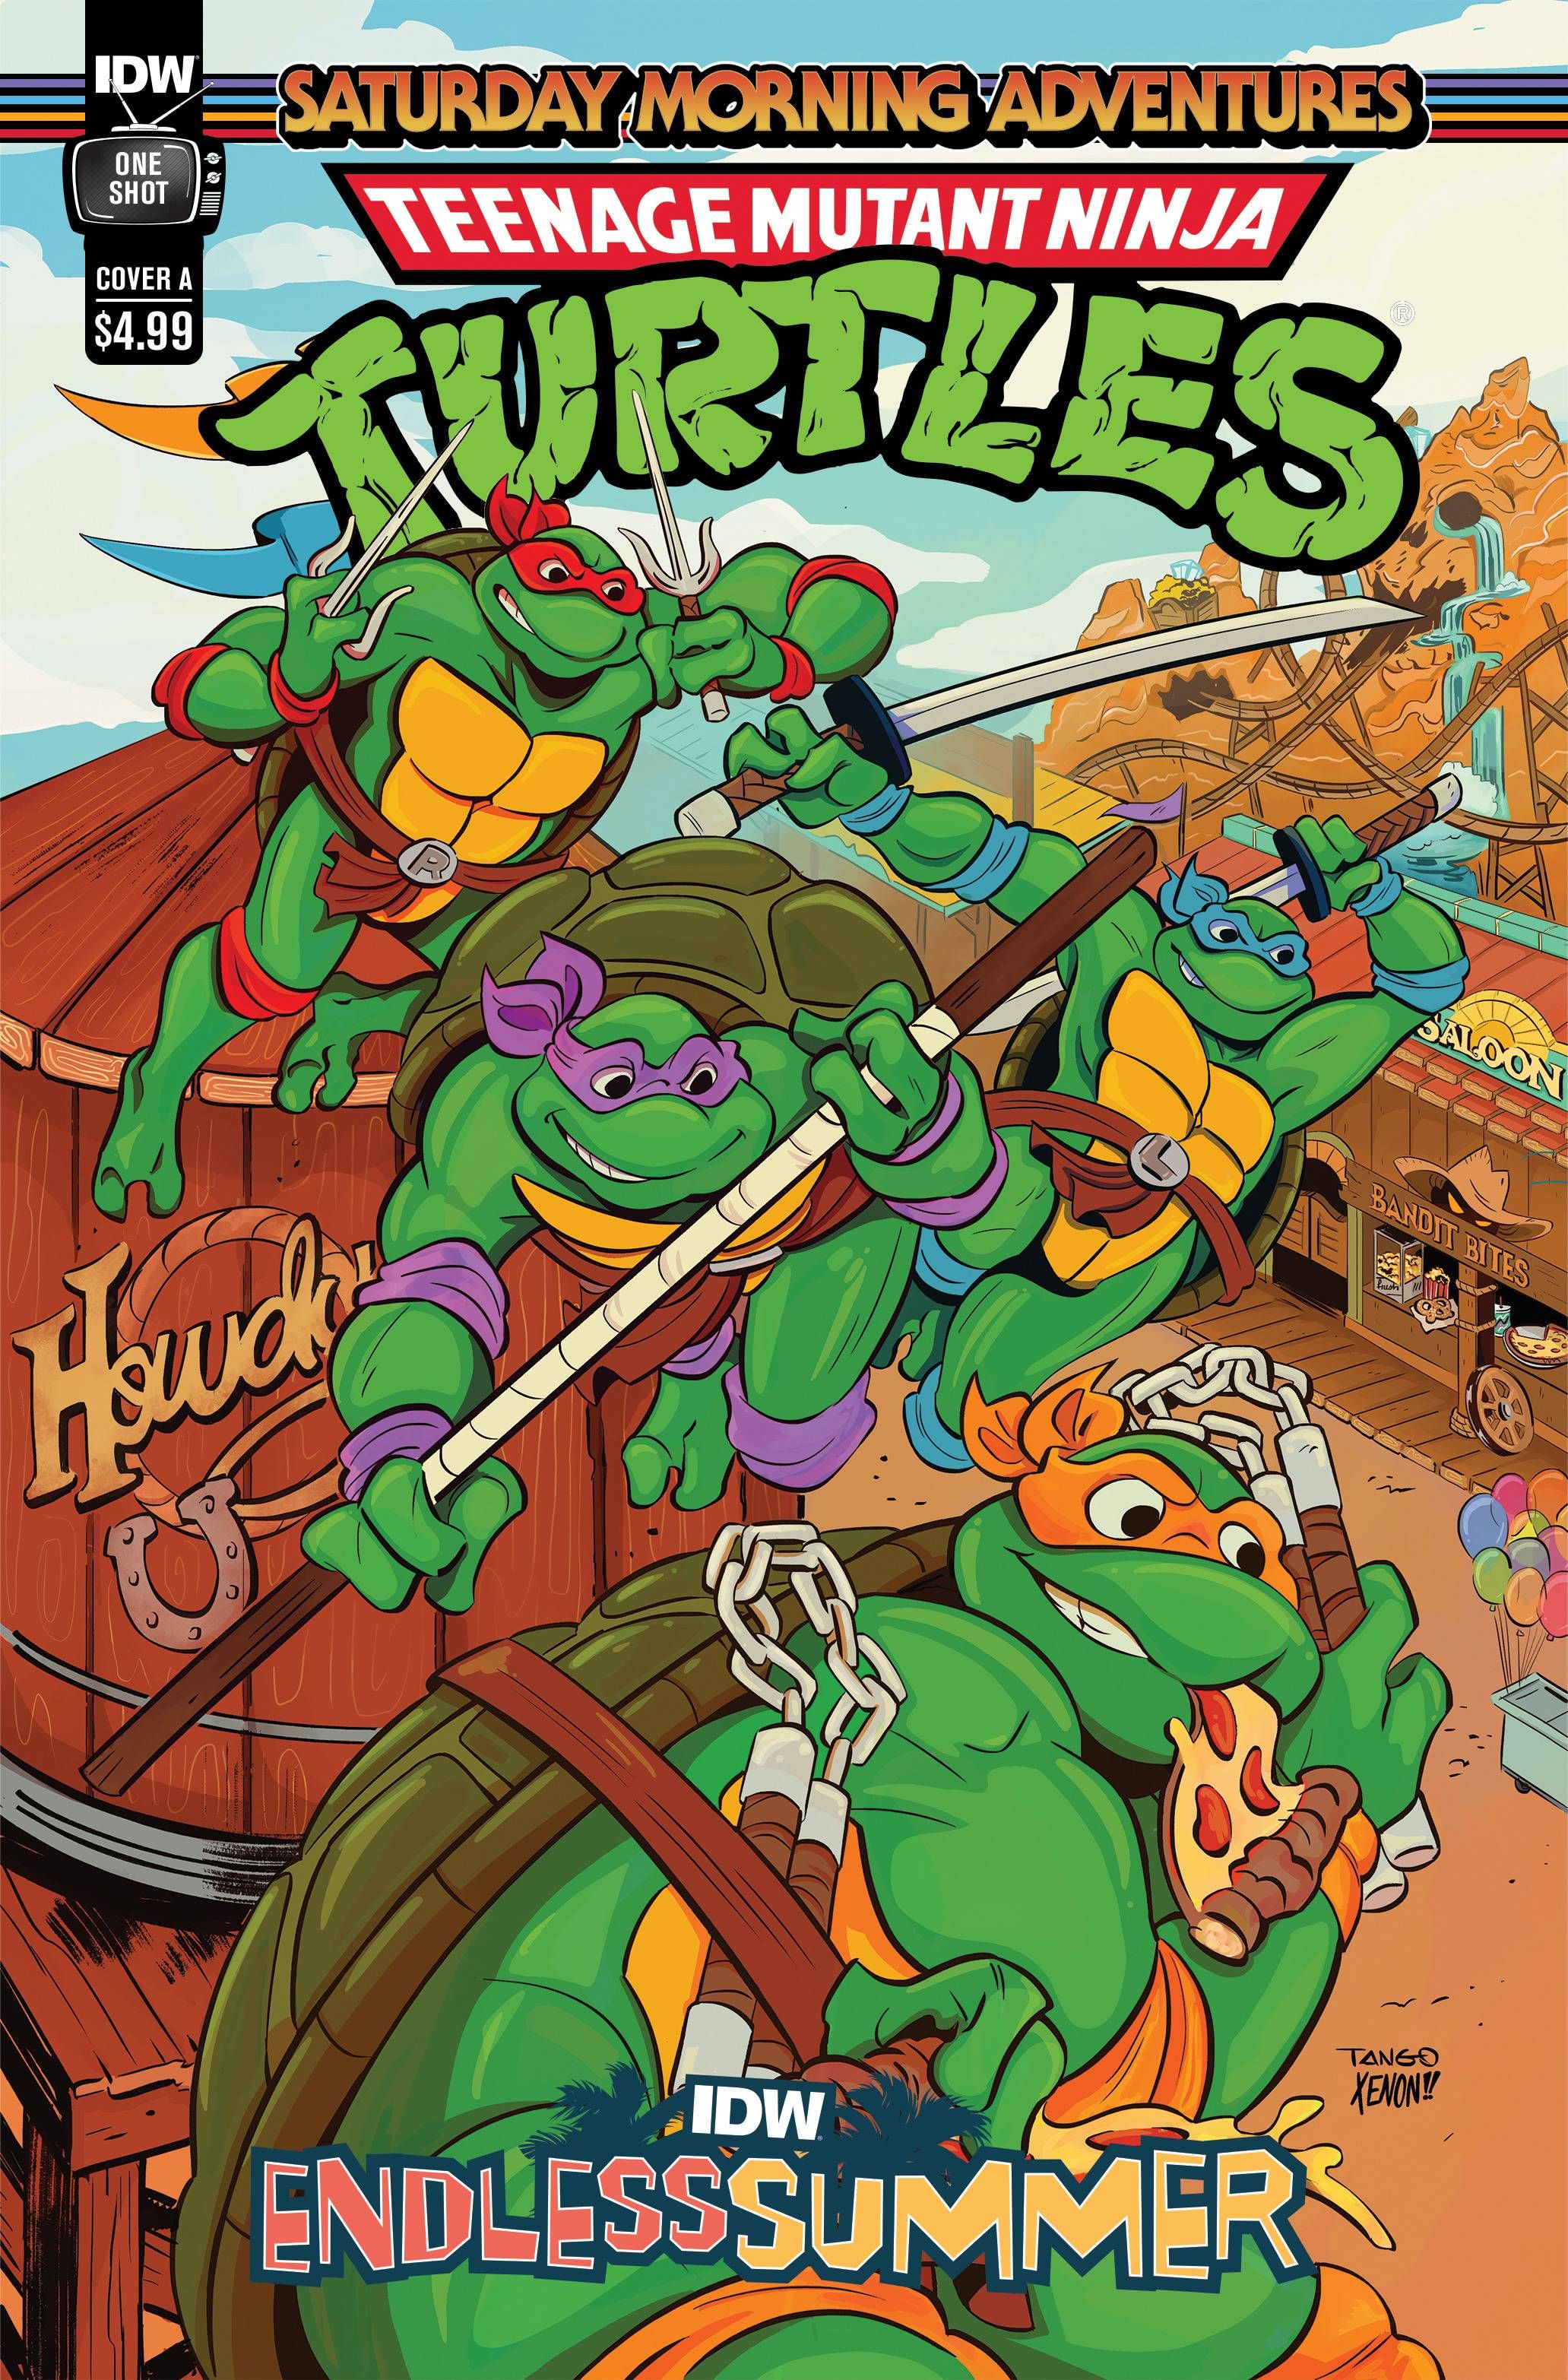 IDW Endless Summer: Teenage Mutant Ninja Turtles Saturday Morning Adventures #nn Comic